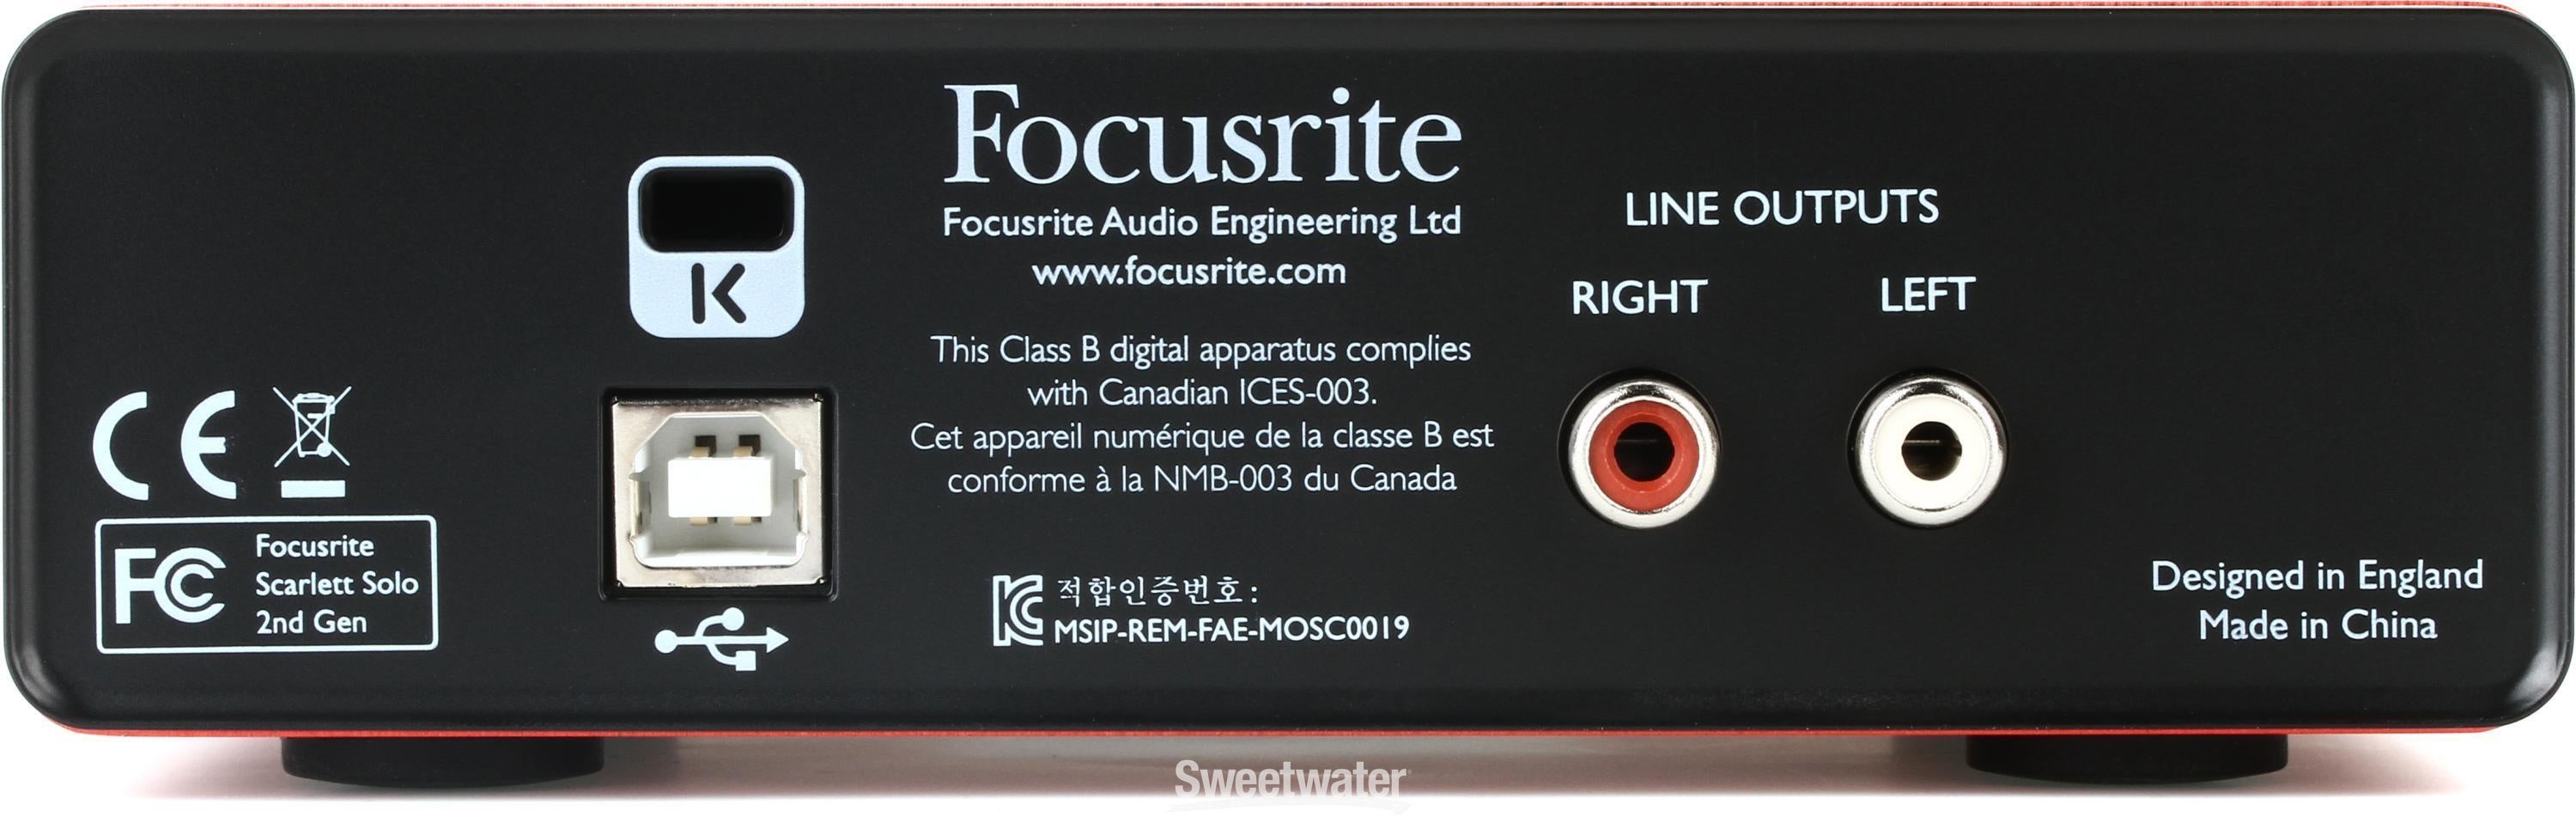 Focusrite Scarlett Solo USB Audio Interface | Sweetwater